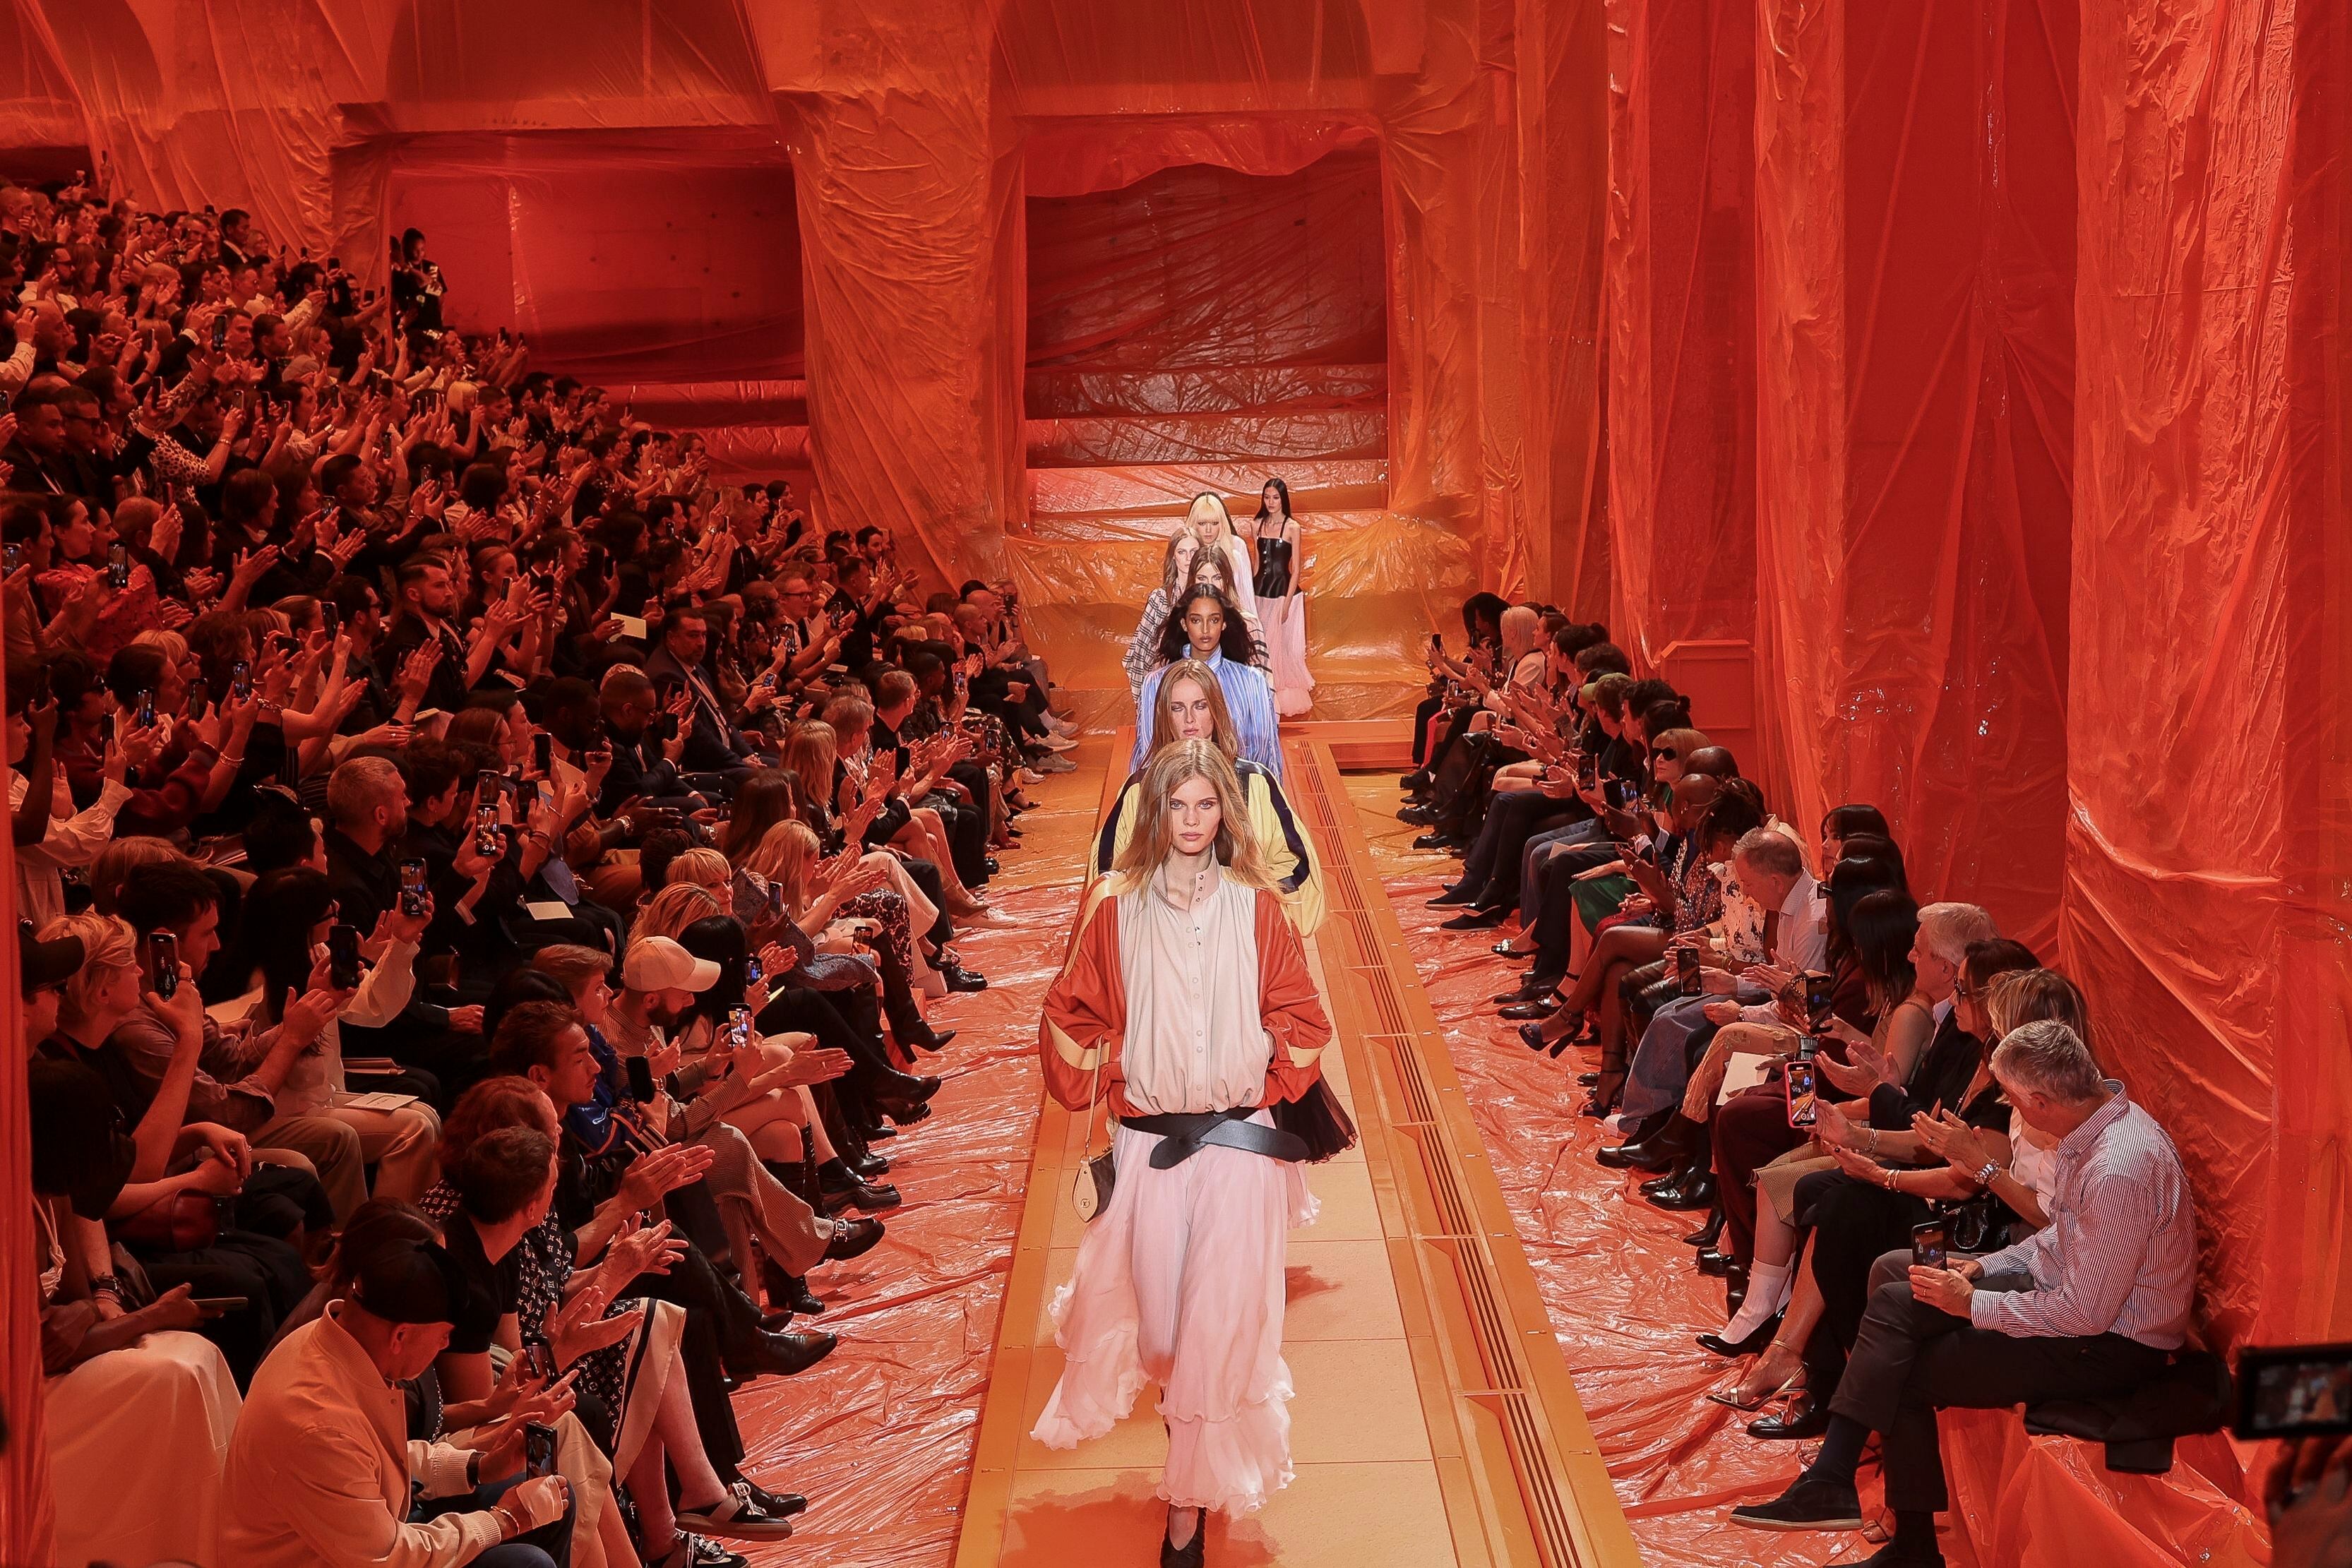 Paris Fashion Week 2022: Louis Vuitton showed off Nicolas